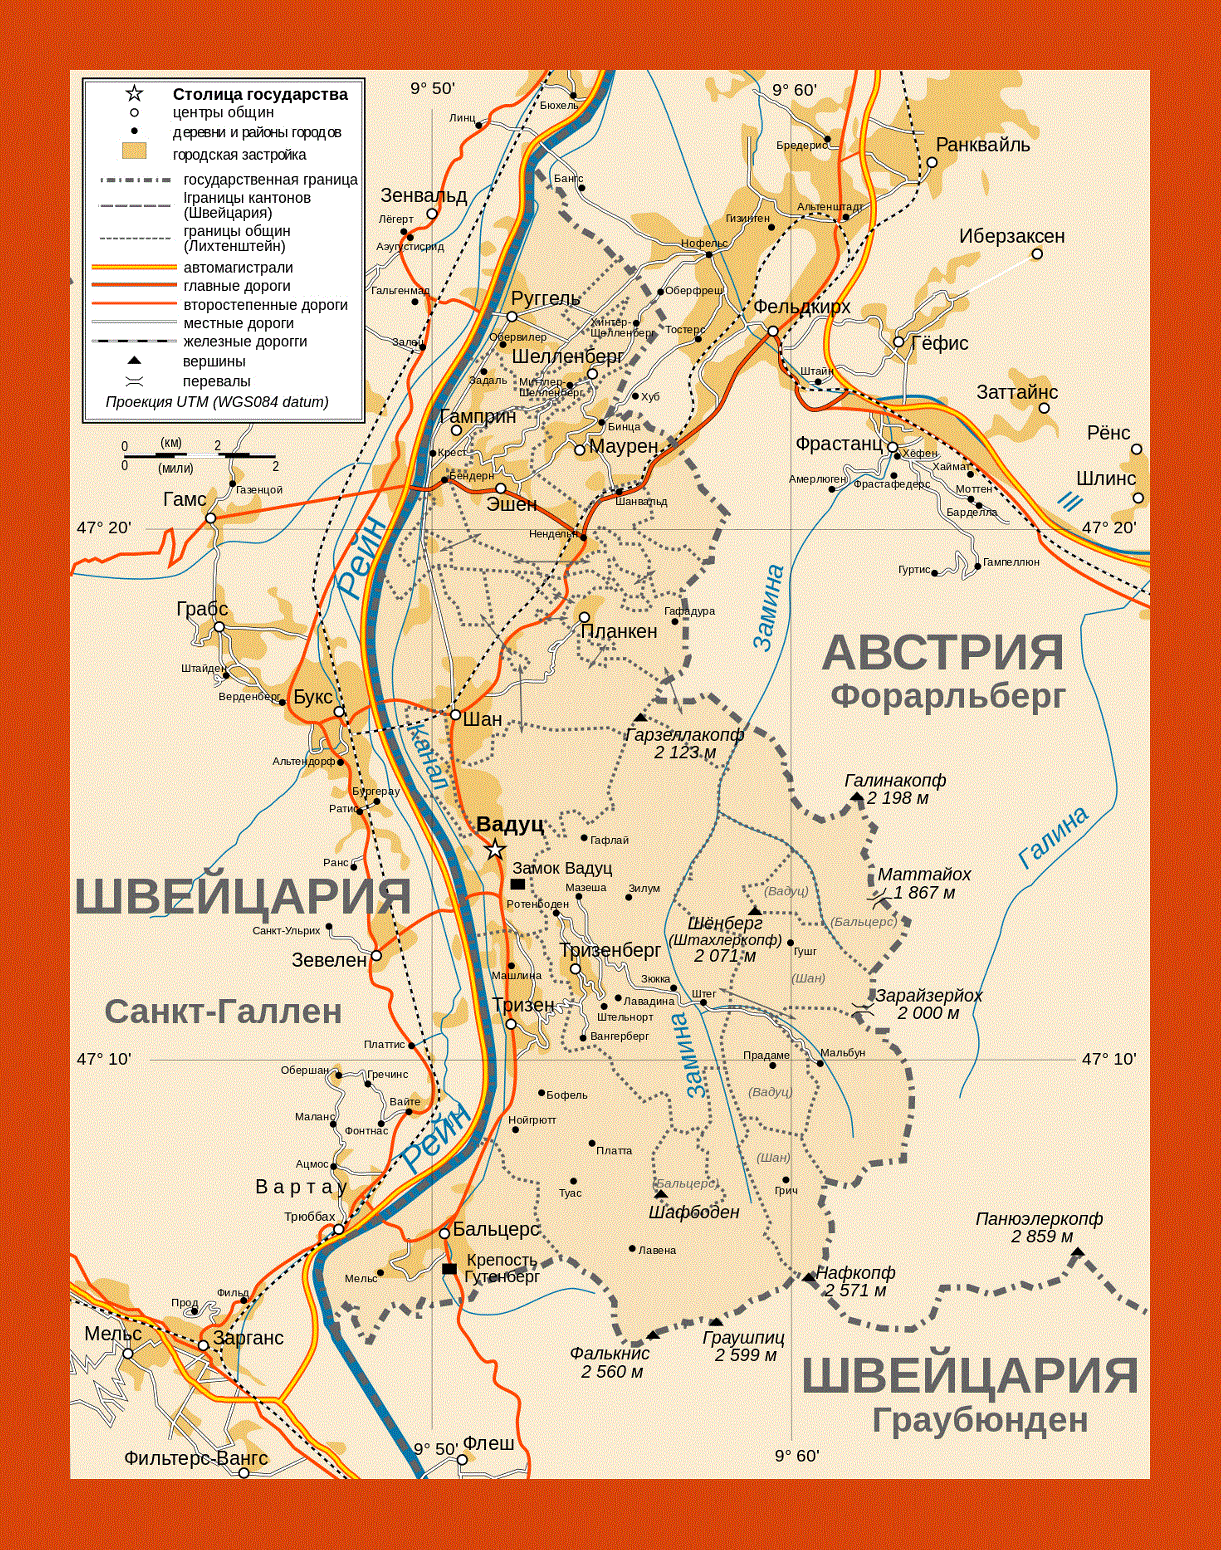 Political and administrative map of Liechtenstein in russian